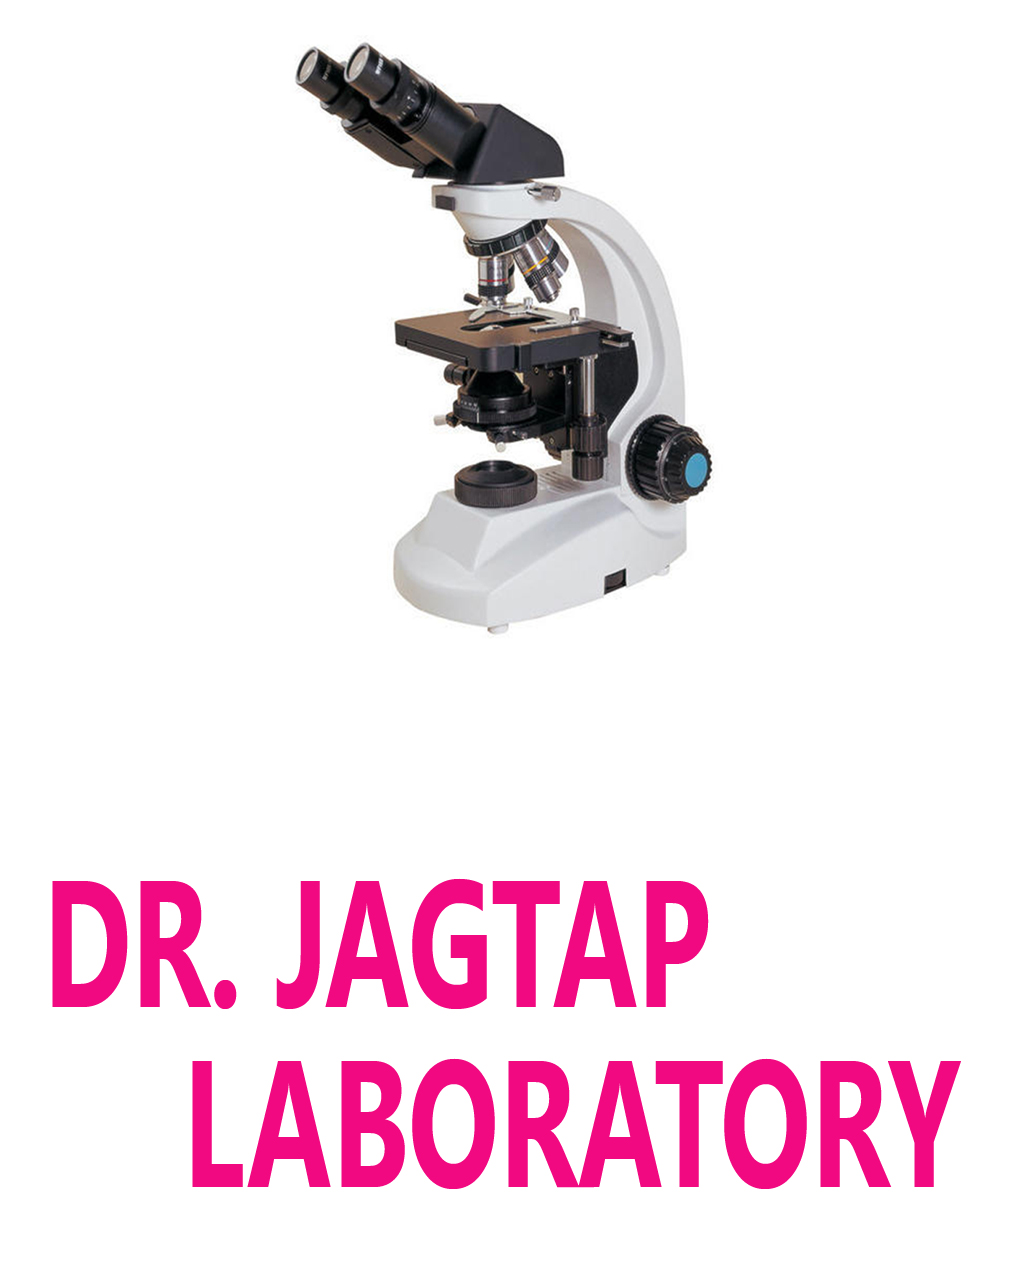 DR. JAGTAP LABORATORY| SolapurMall.com